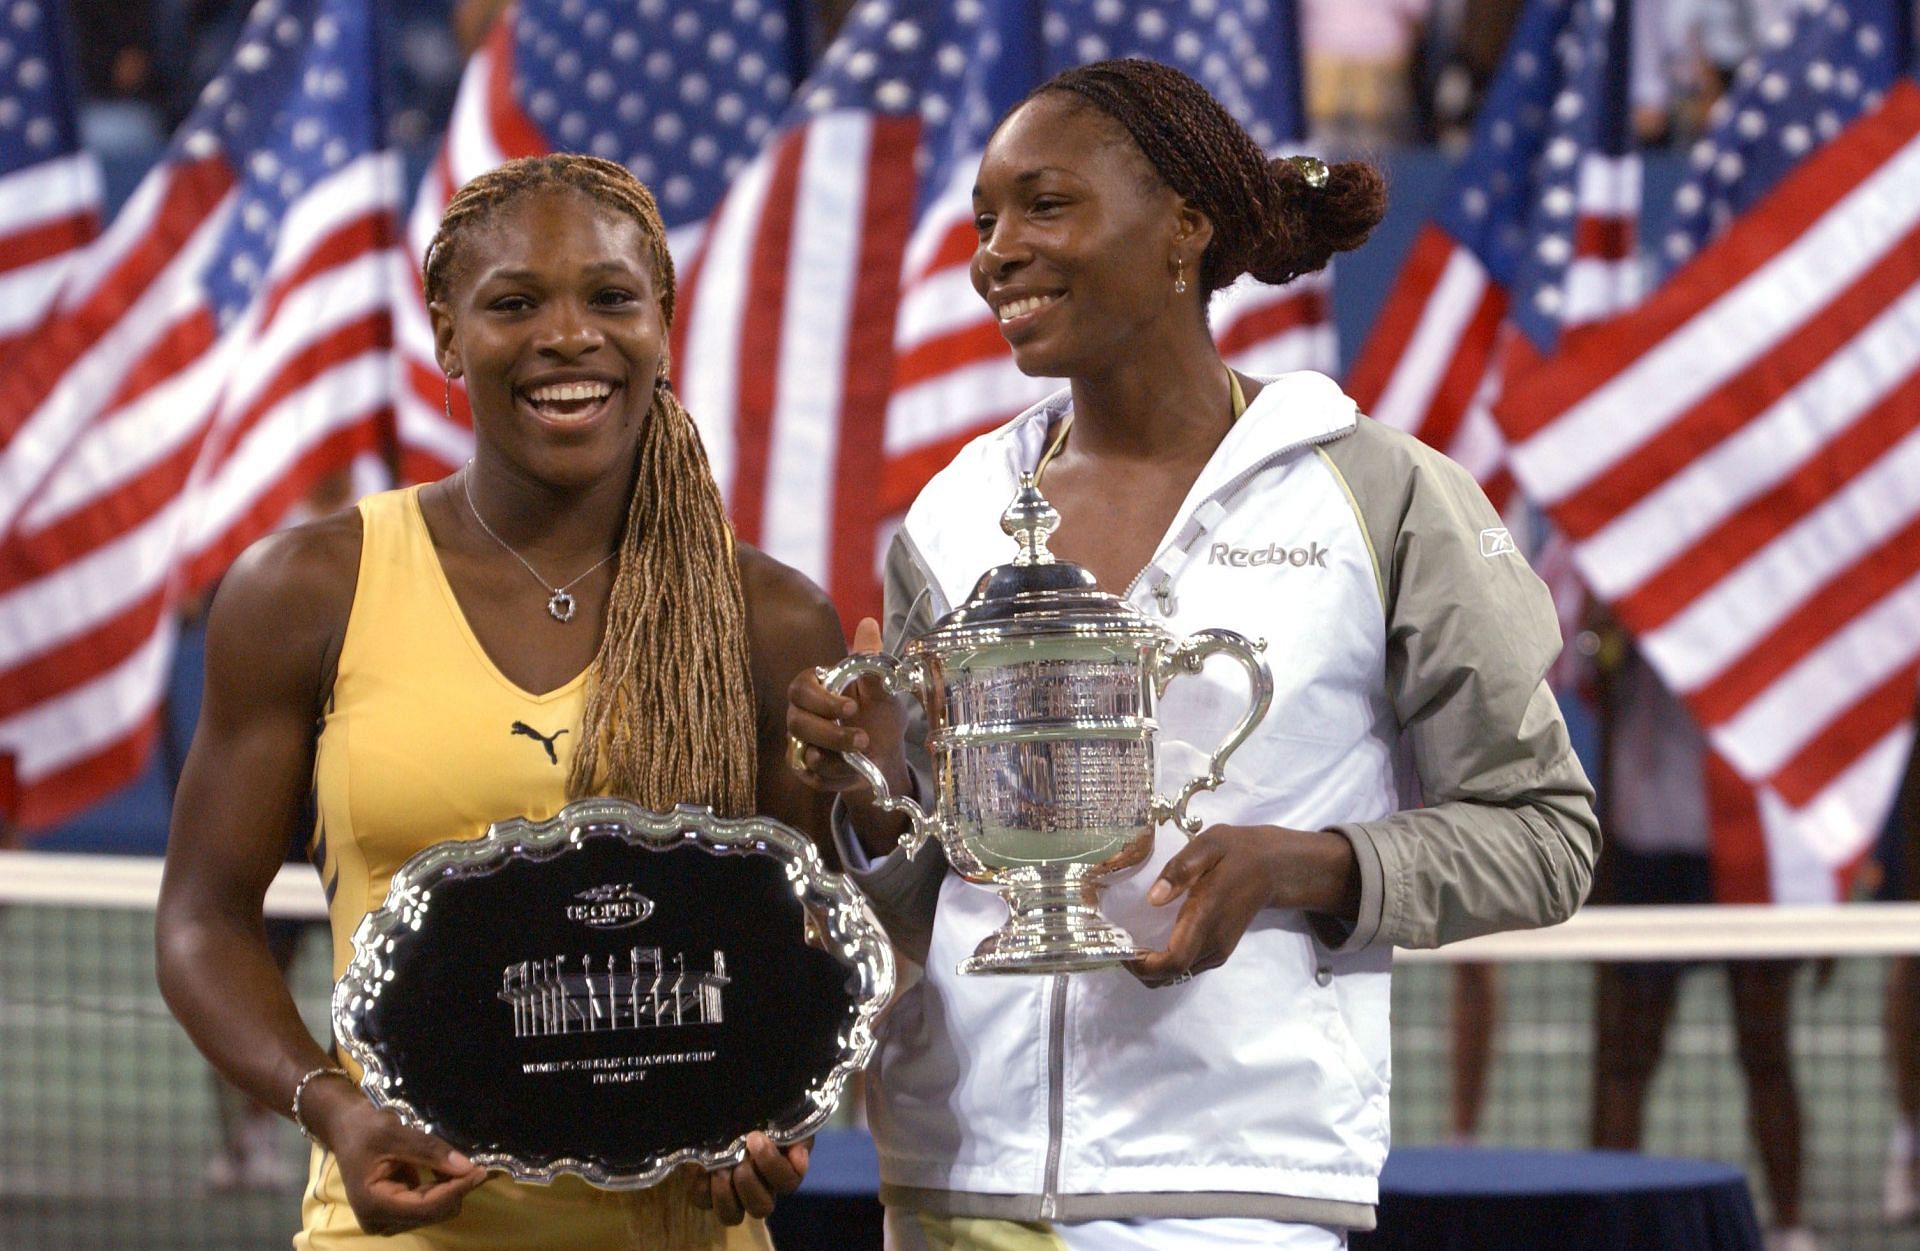 Venus Williams beat Serena Williams in the US Open 2001 final